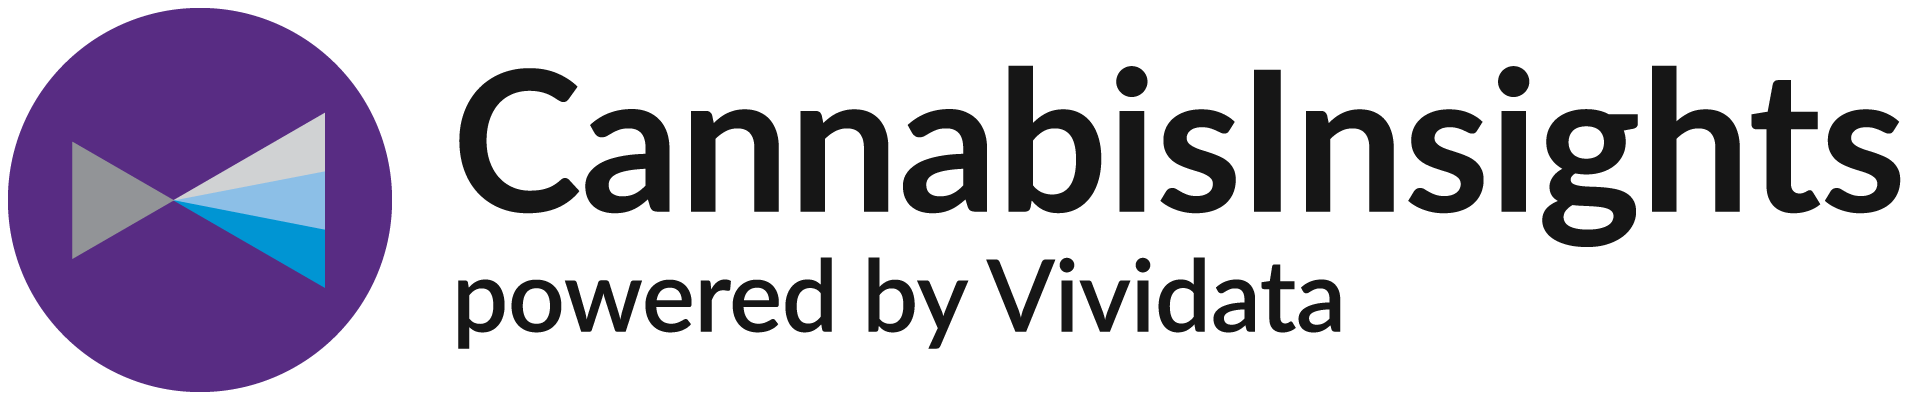 CannabisInsights Powered by Vividata